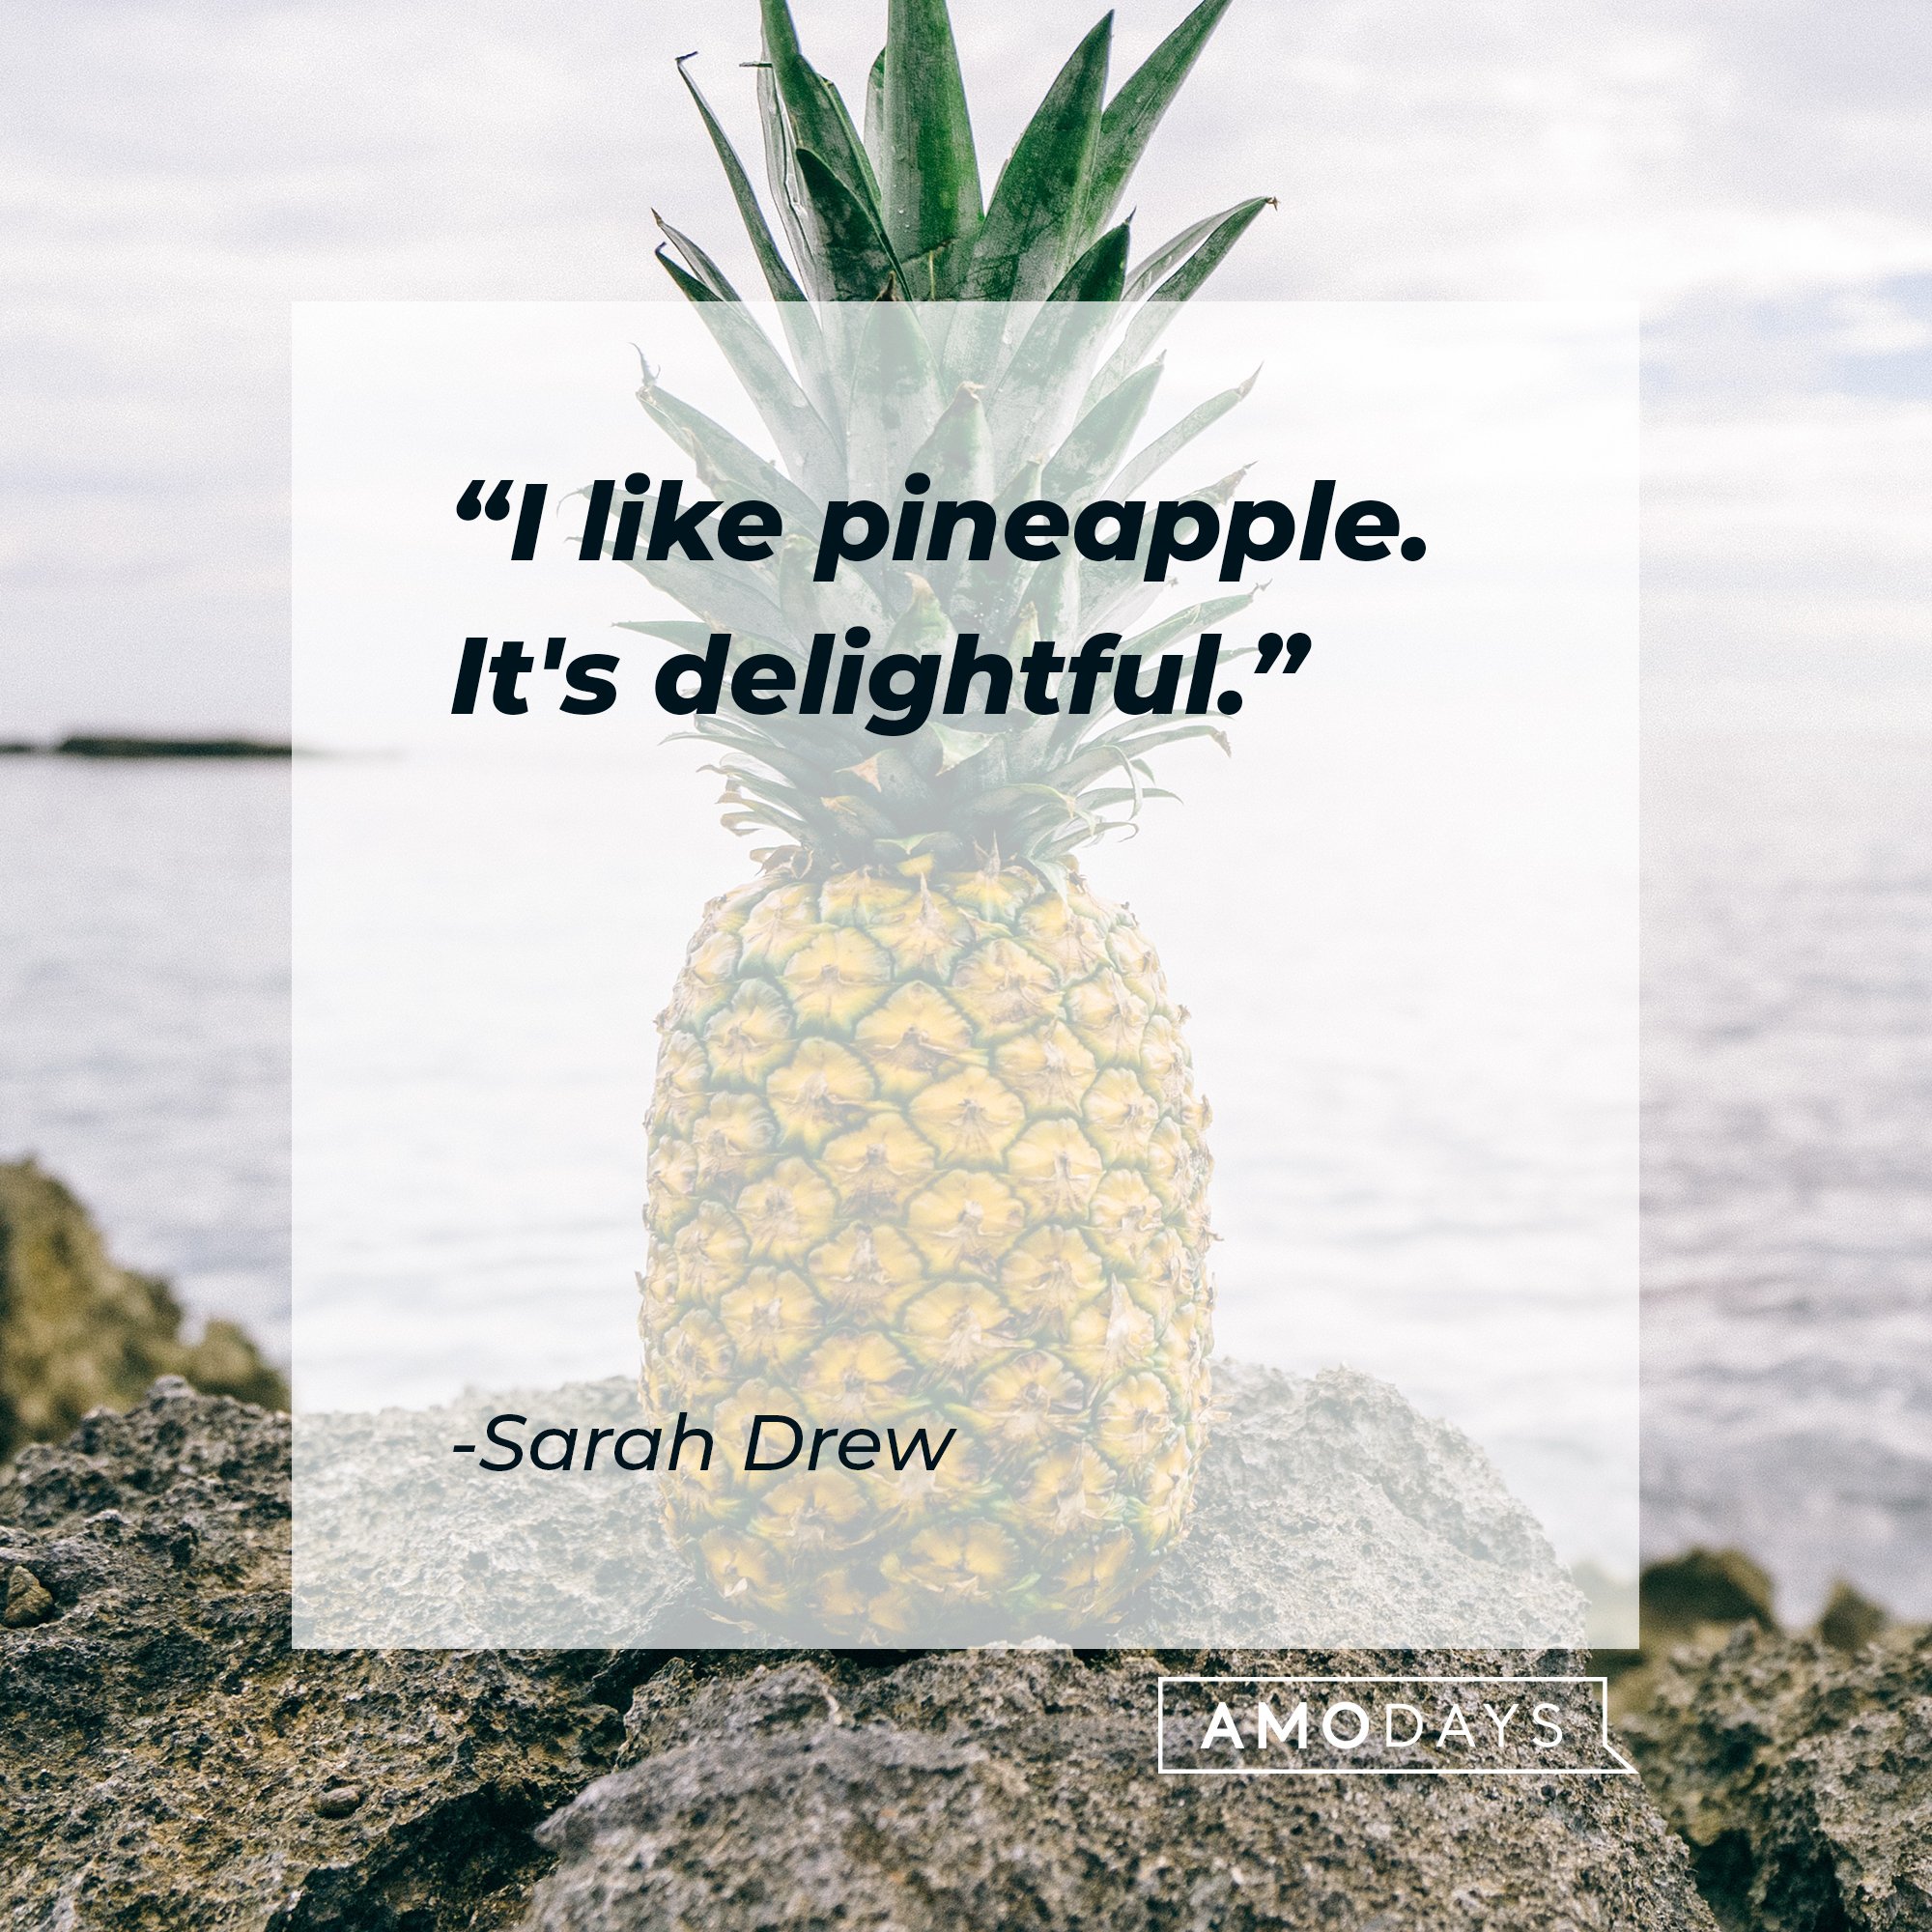 Sarah Drew's quote: "I like pineapple. It's delightful." | Image: AmoDays